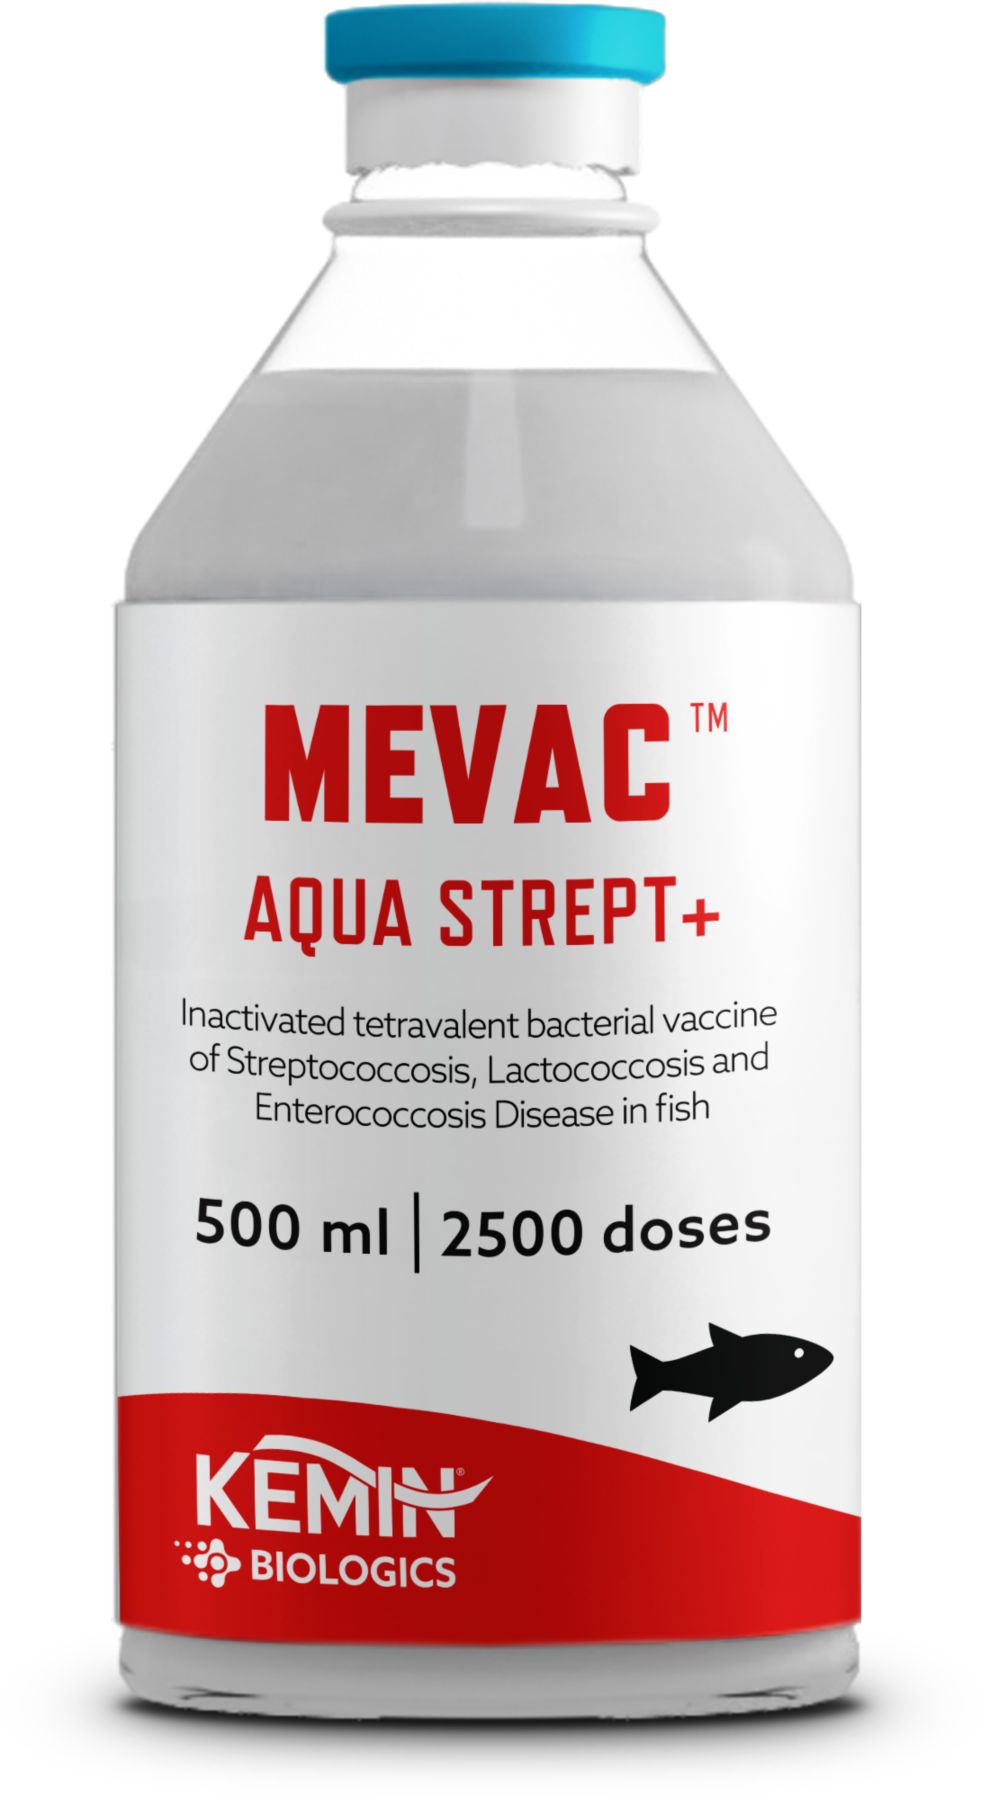 MEVAC AQUA STREPT big label mockup